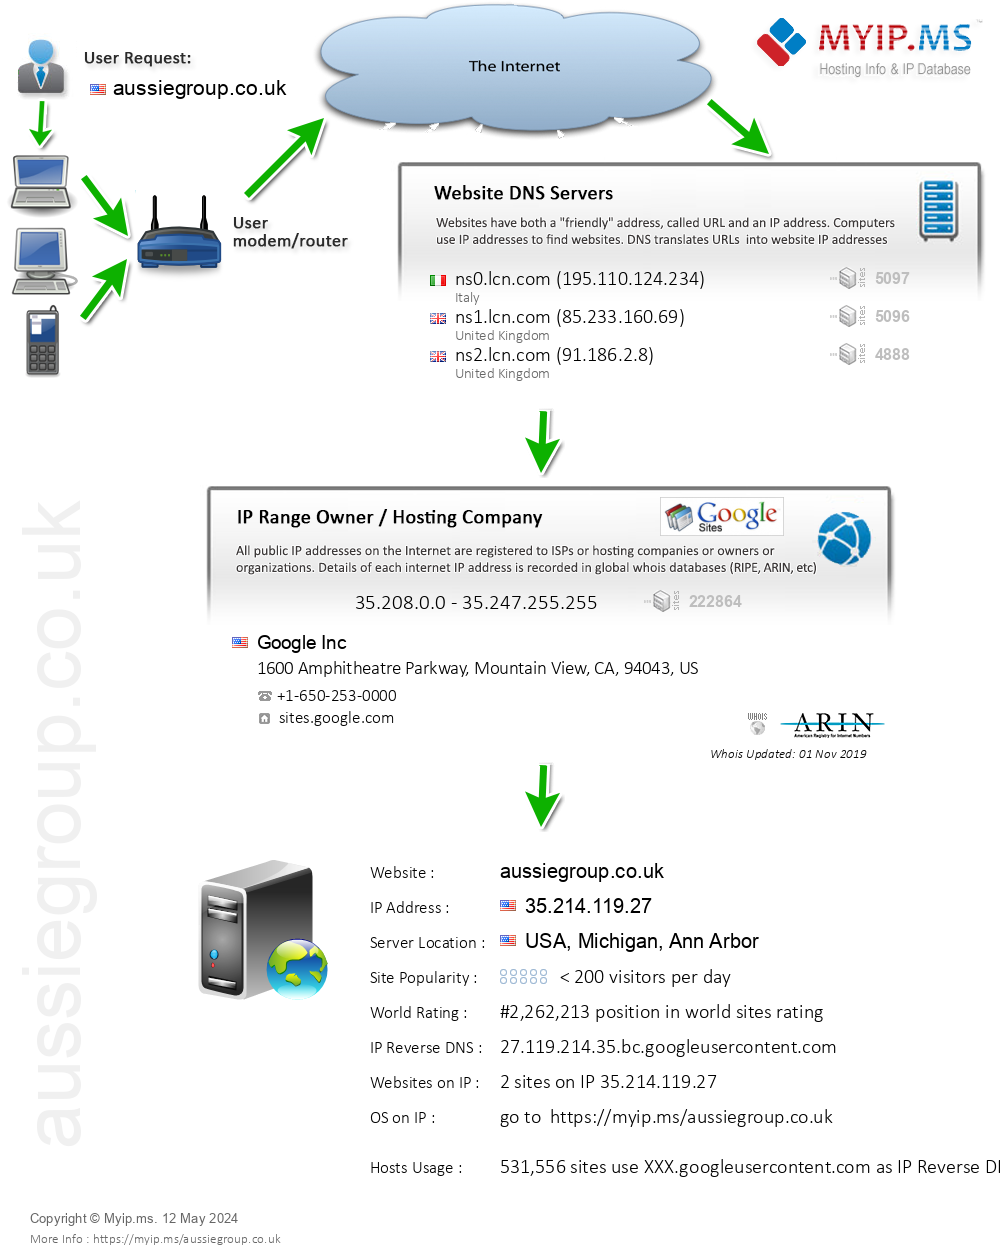 Aussiegroup.co.uk - Website Hosting Visual IP Diagram